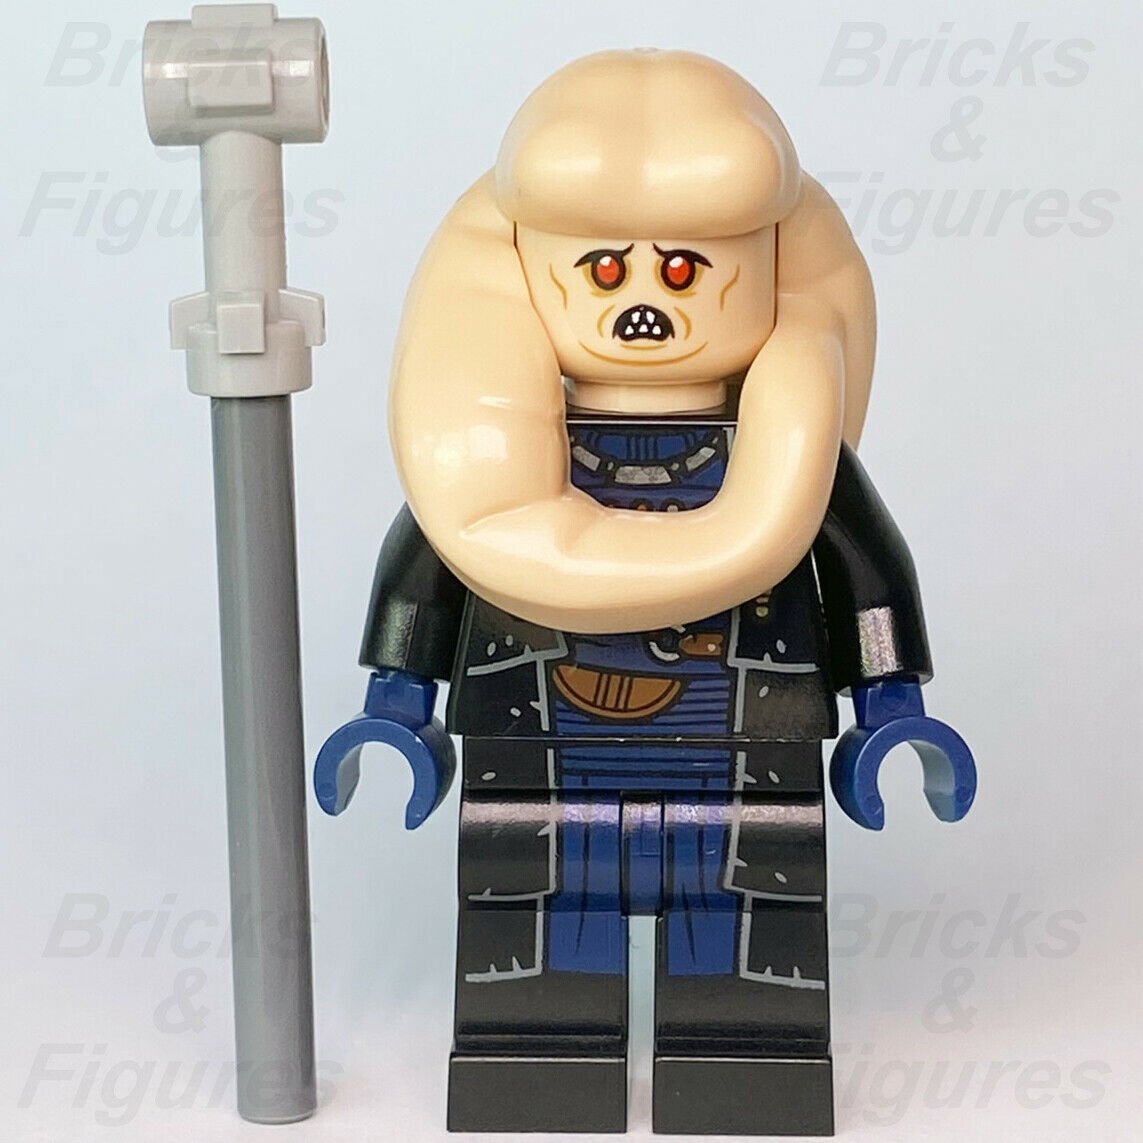 New Star Wars LEGO Bib Fortuna The Book of Boba Fett Minifigure 75326 sw1193 - Bricks & Figures